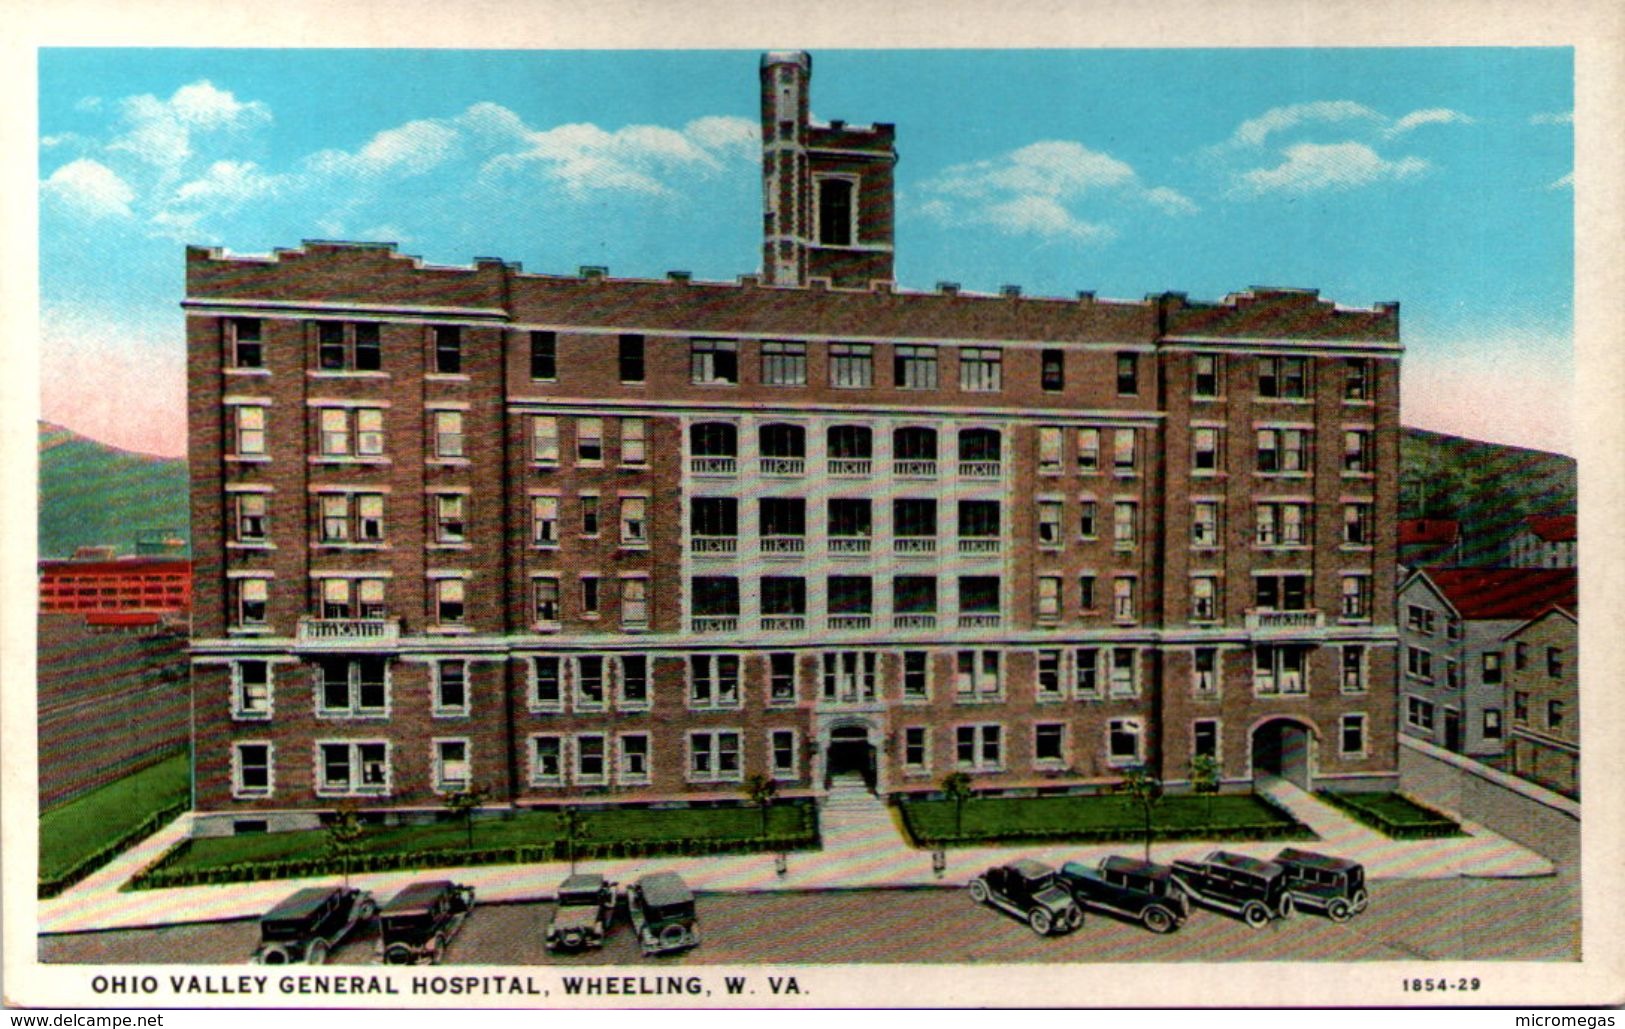 Ohio Valley General Hospital, Wheeling, W. VA. - Wheeling